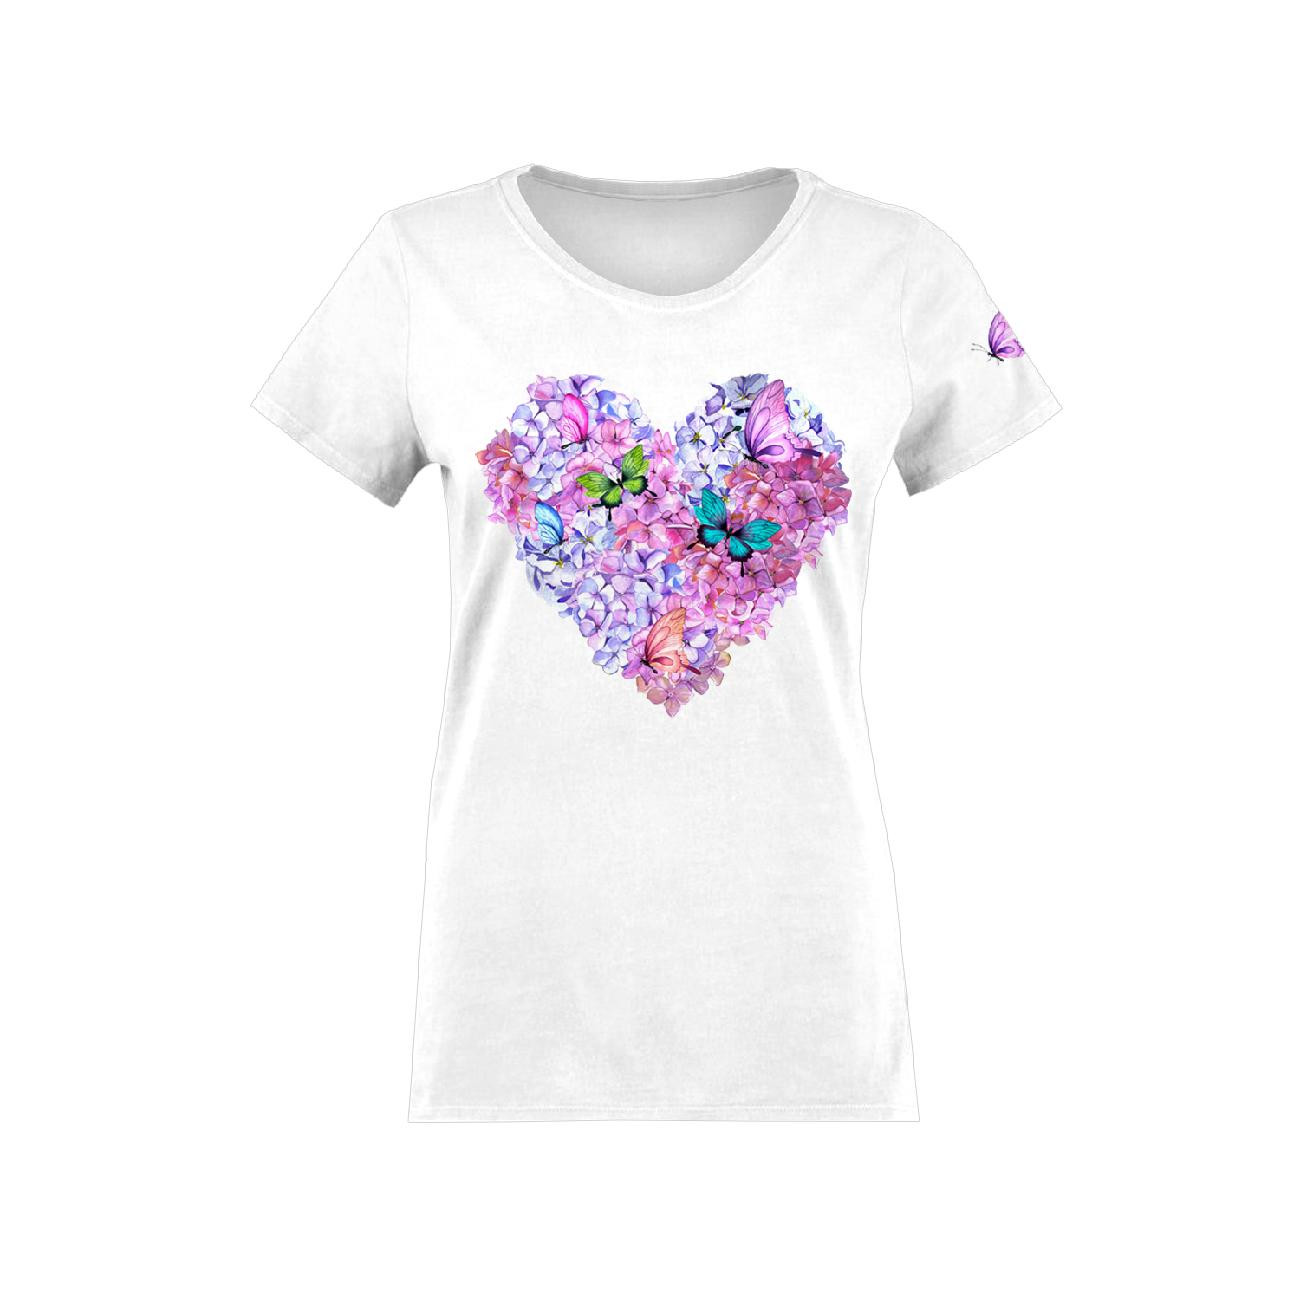 WOMEN’S T-SHIRT - HEART FLOWERS / white - sewing set